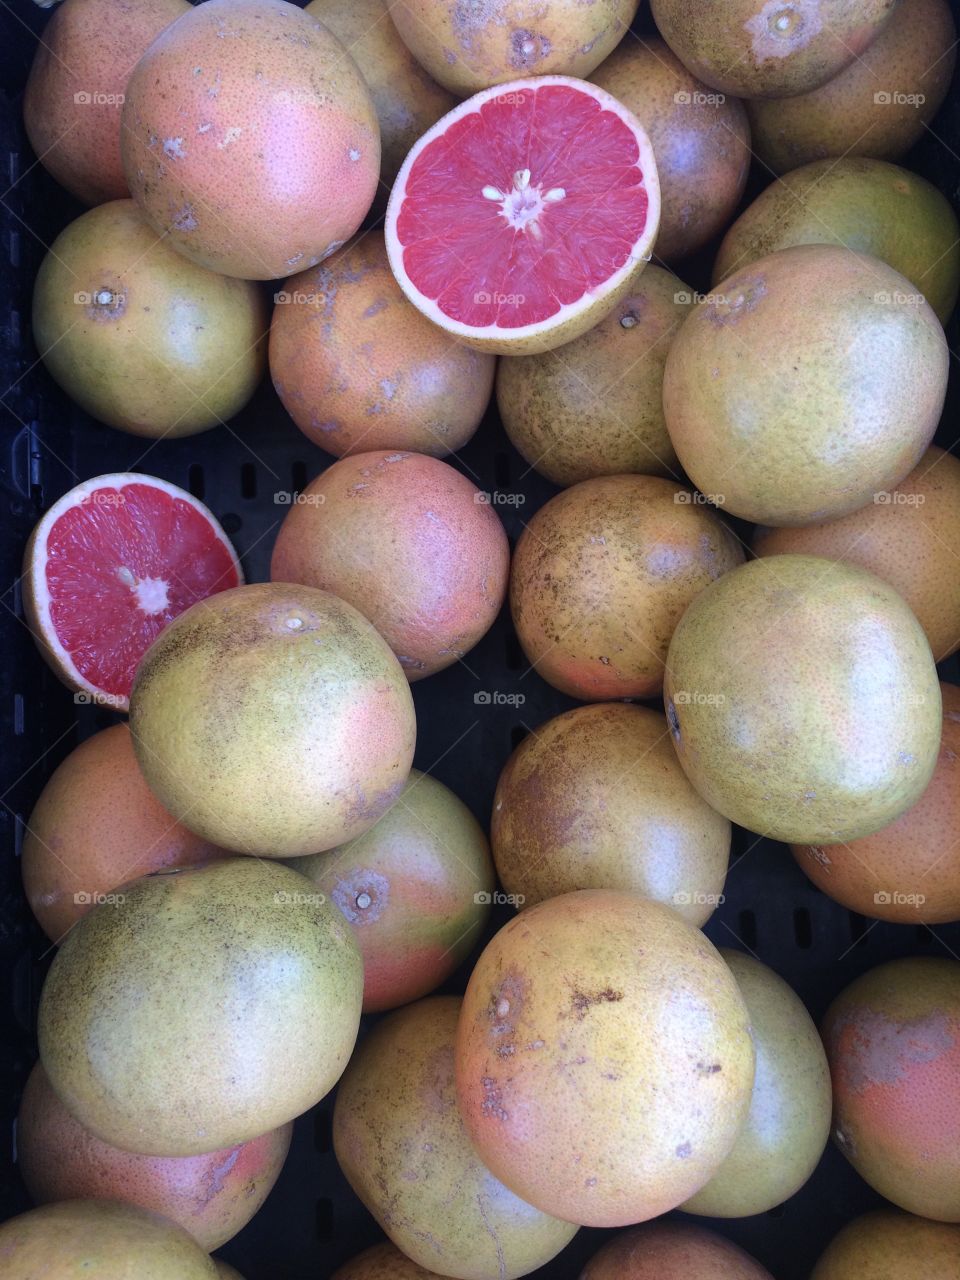 Farmers market grapefruit 